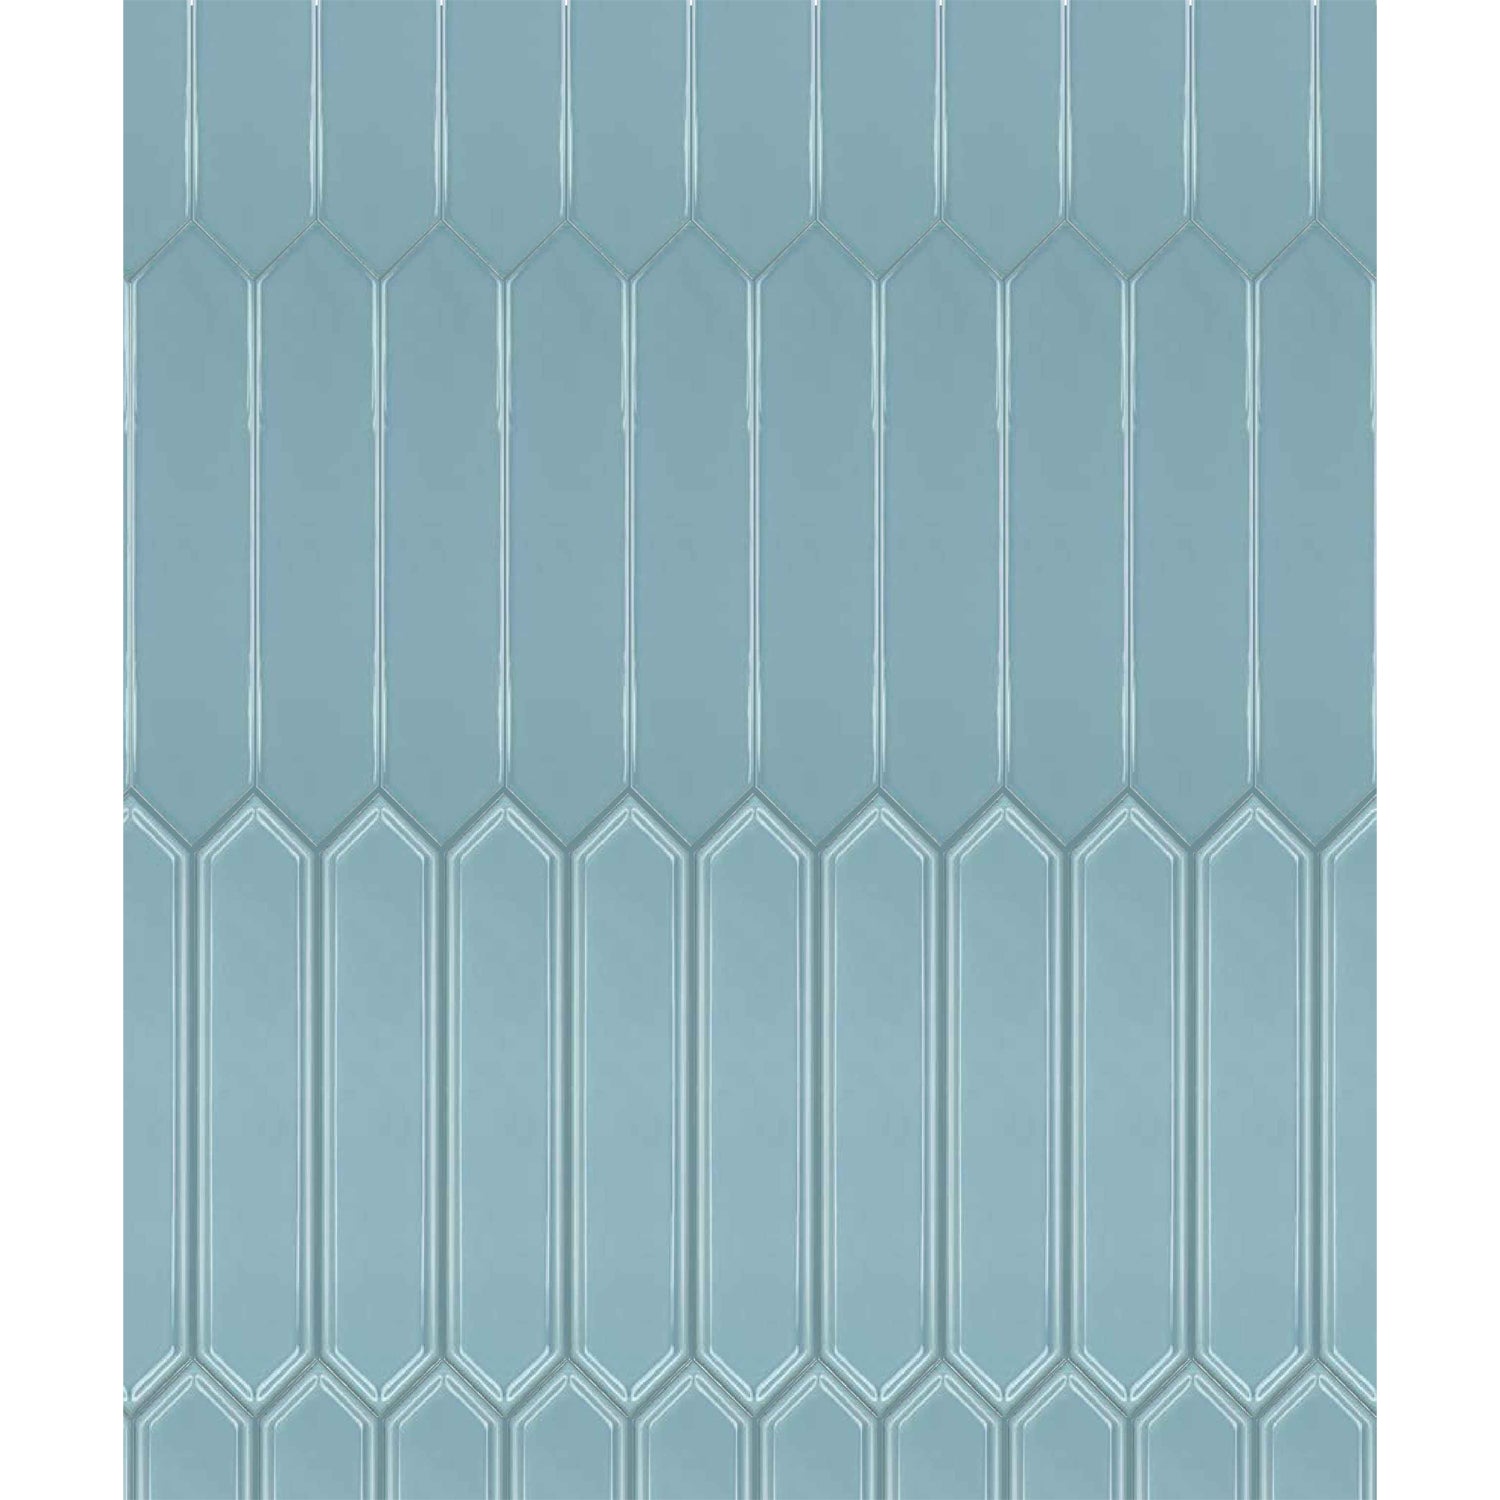 Topcu - Naima - 2.5 in. x 12 in. Ceramic Wall Tile - Ocean